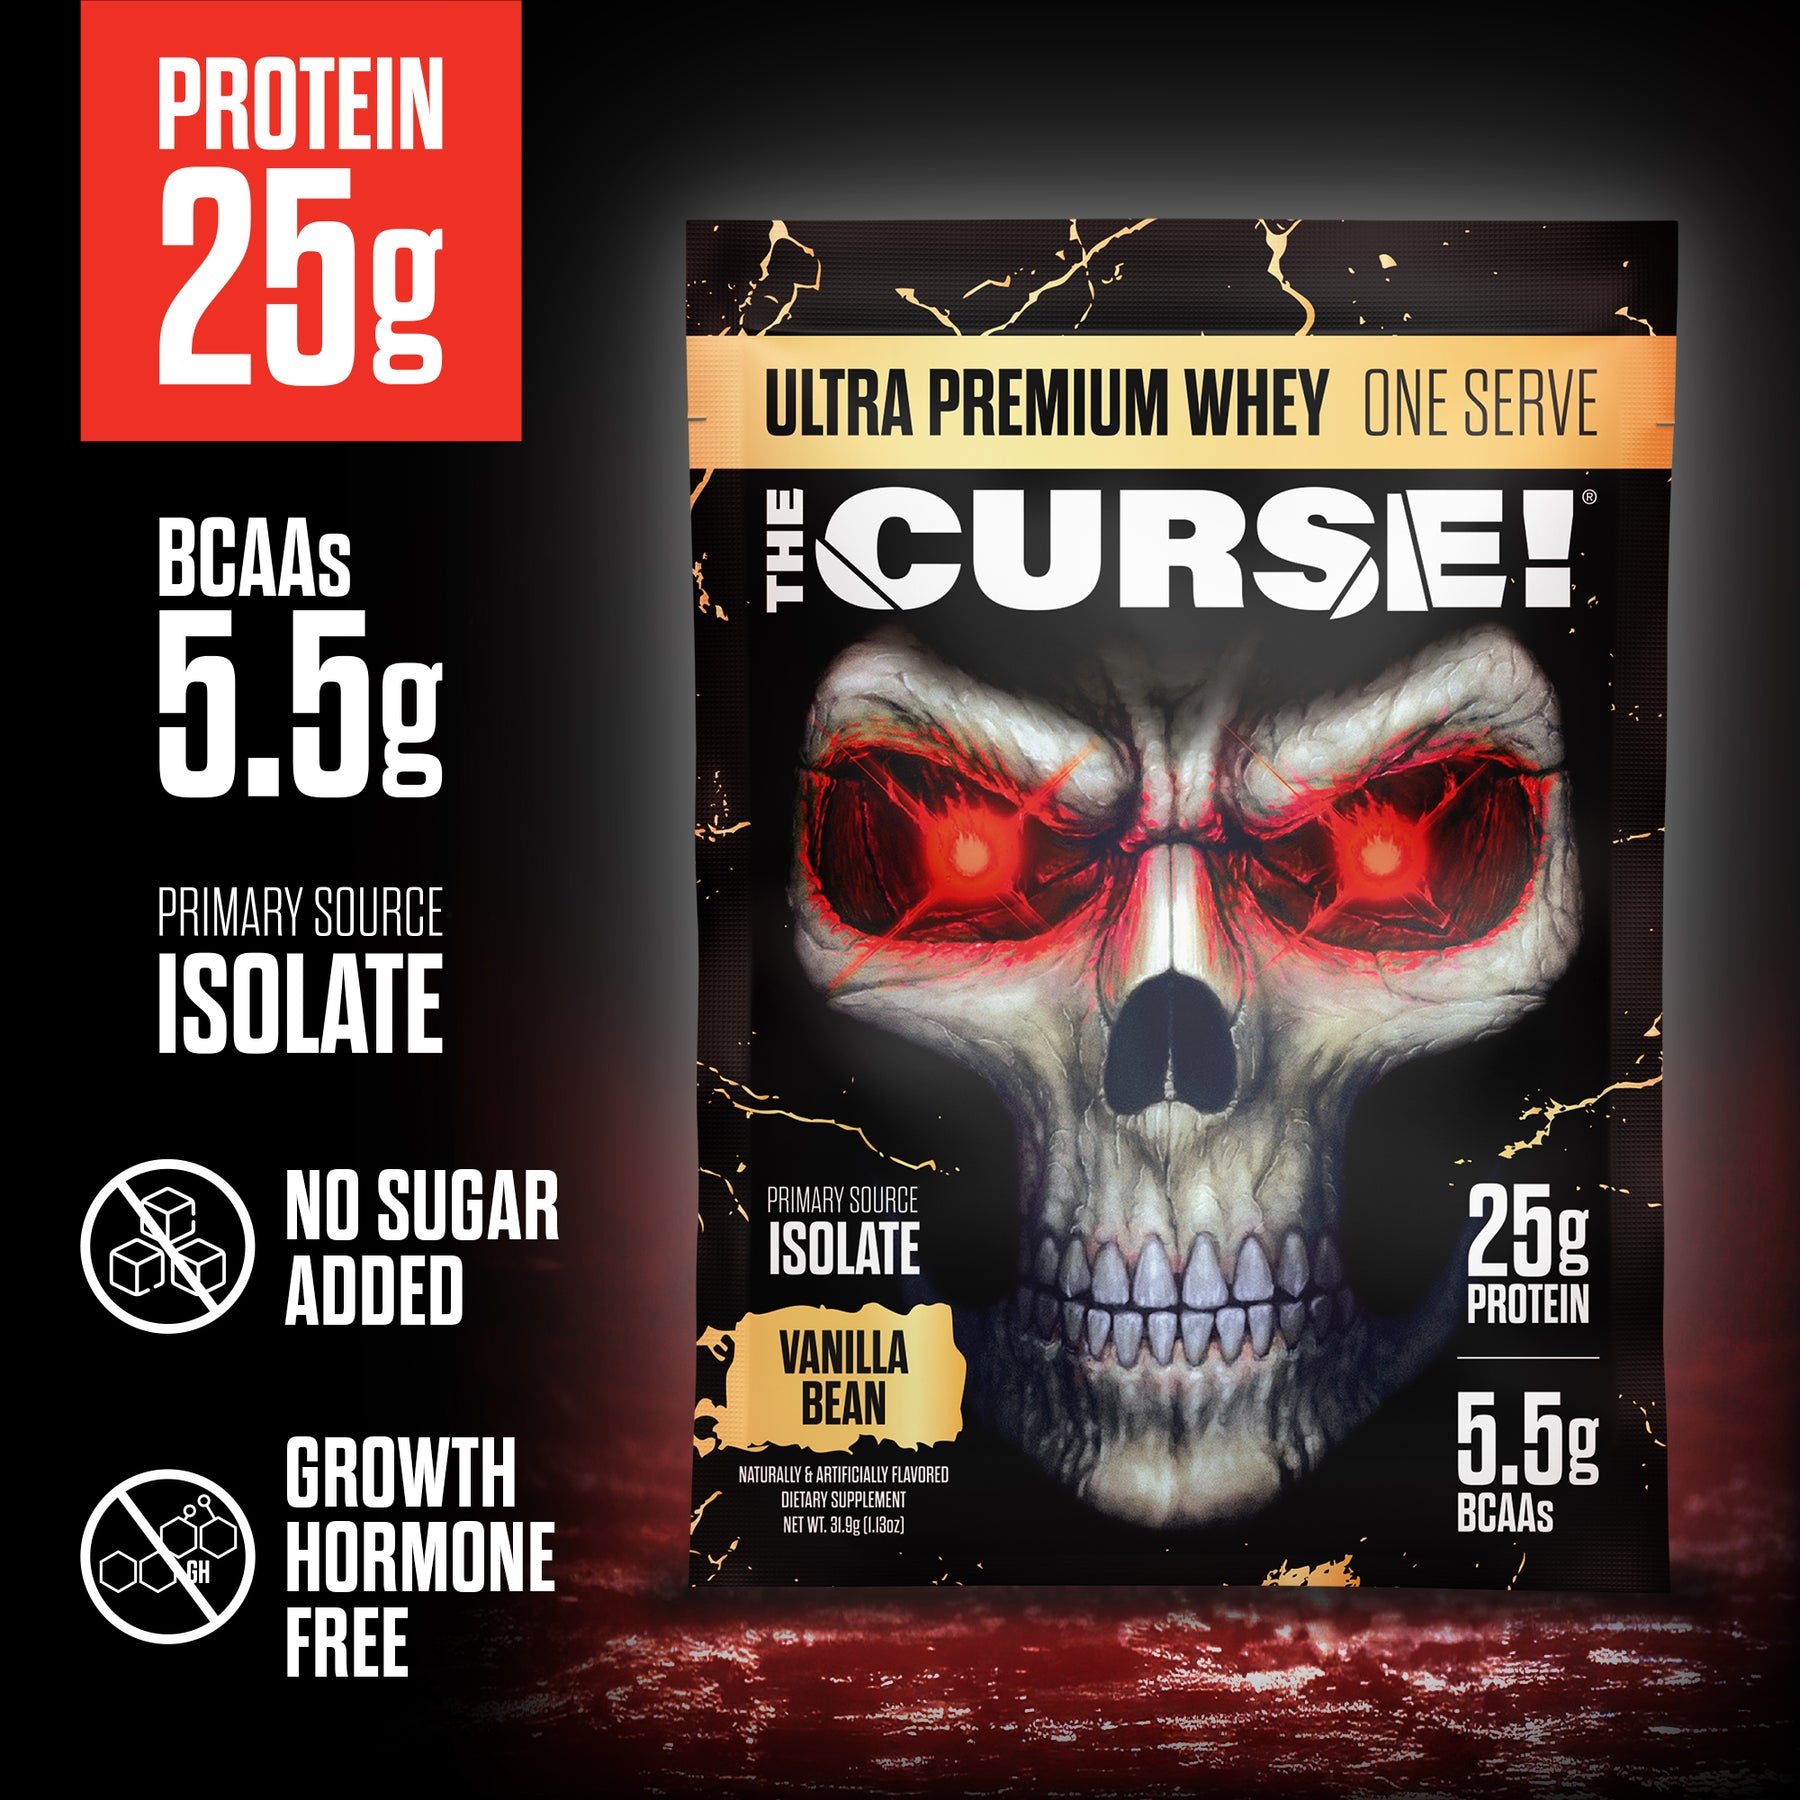 The Curse! Ultra Premium Whey - Sample